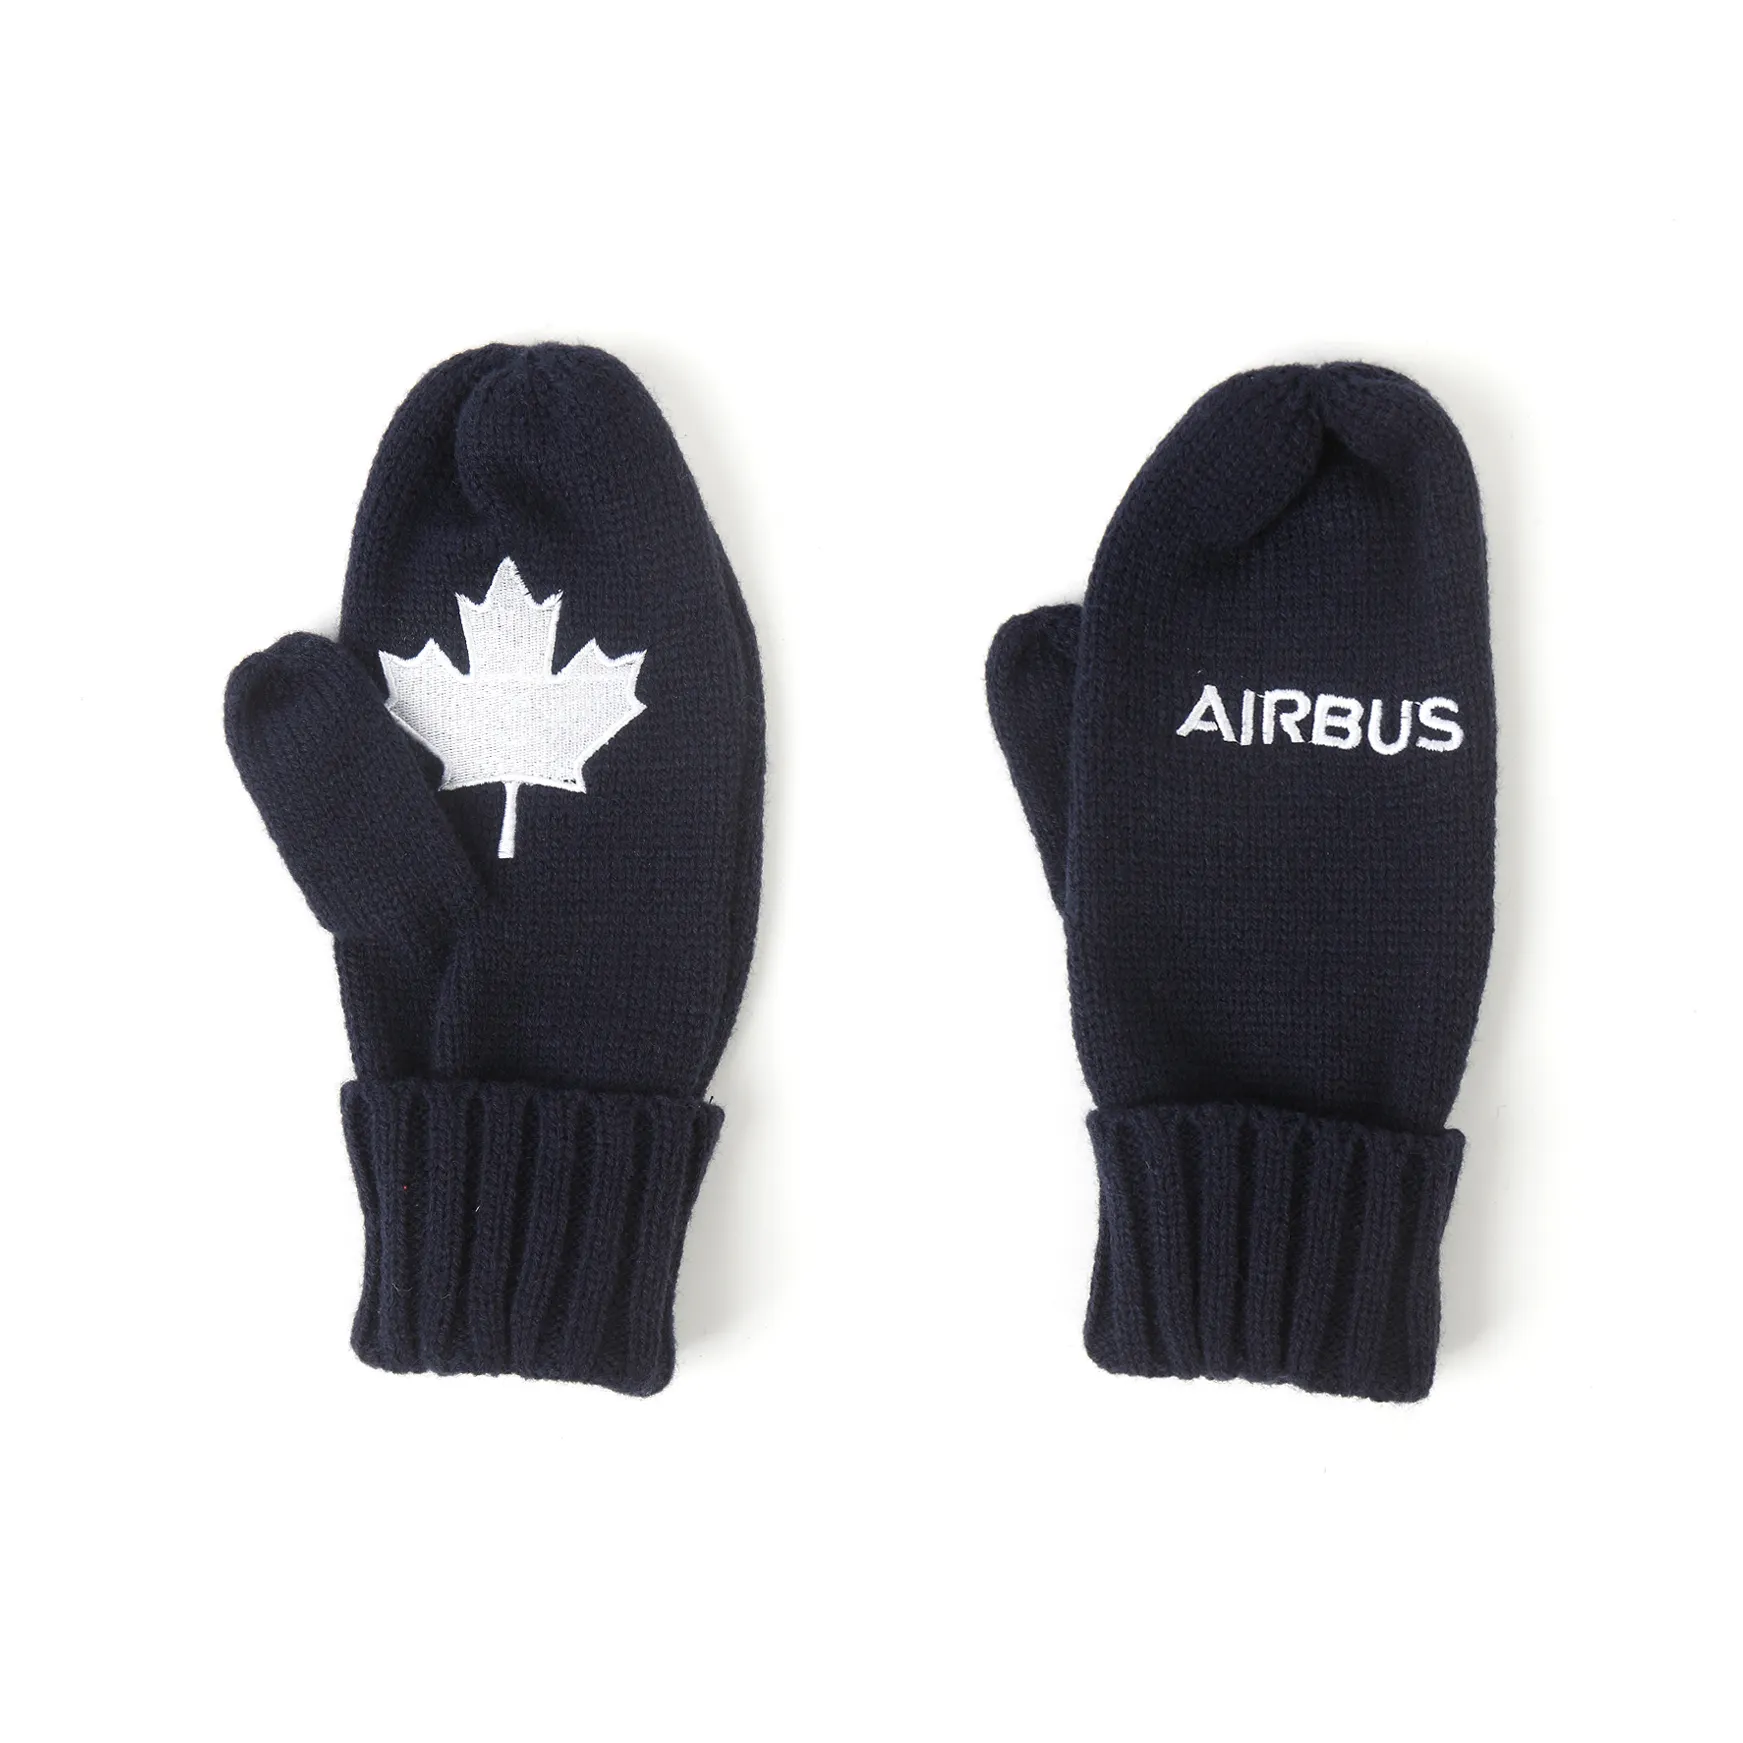 custom winter outdoor ski acrylic mitten gloves for keeping warm